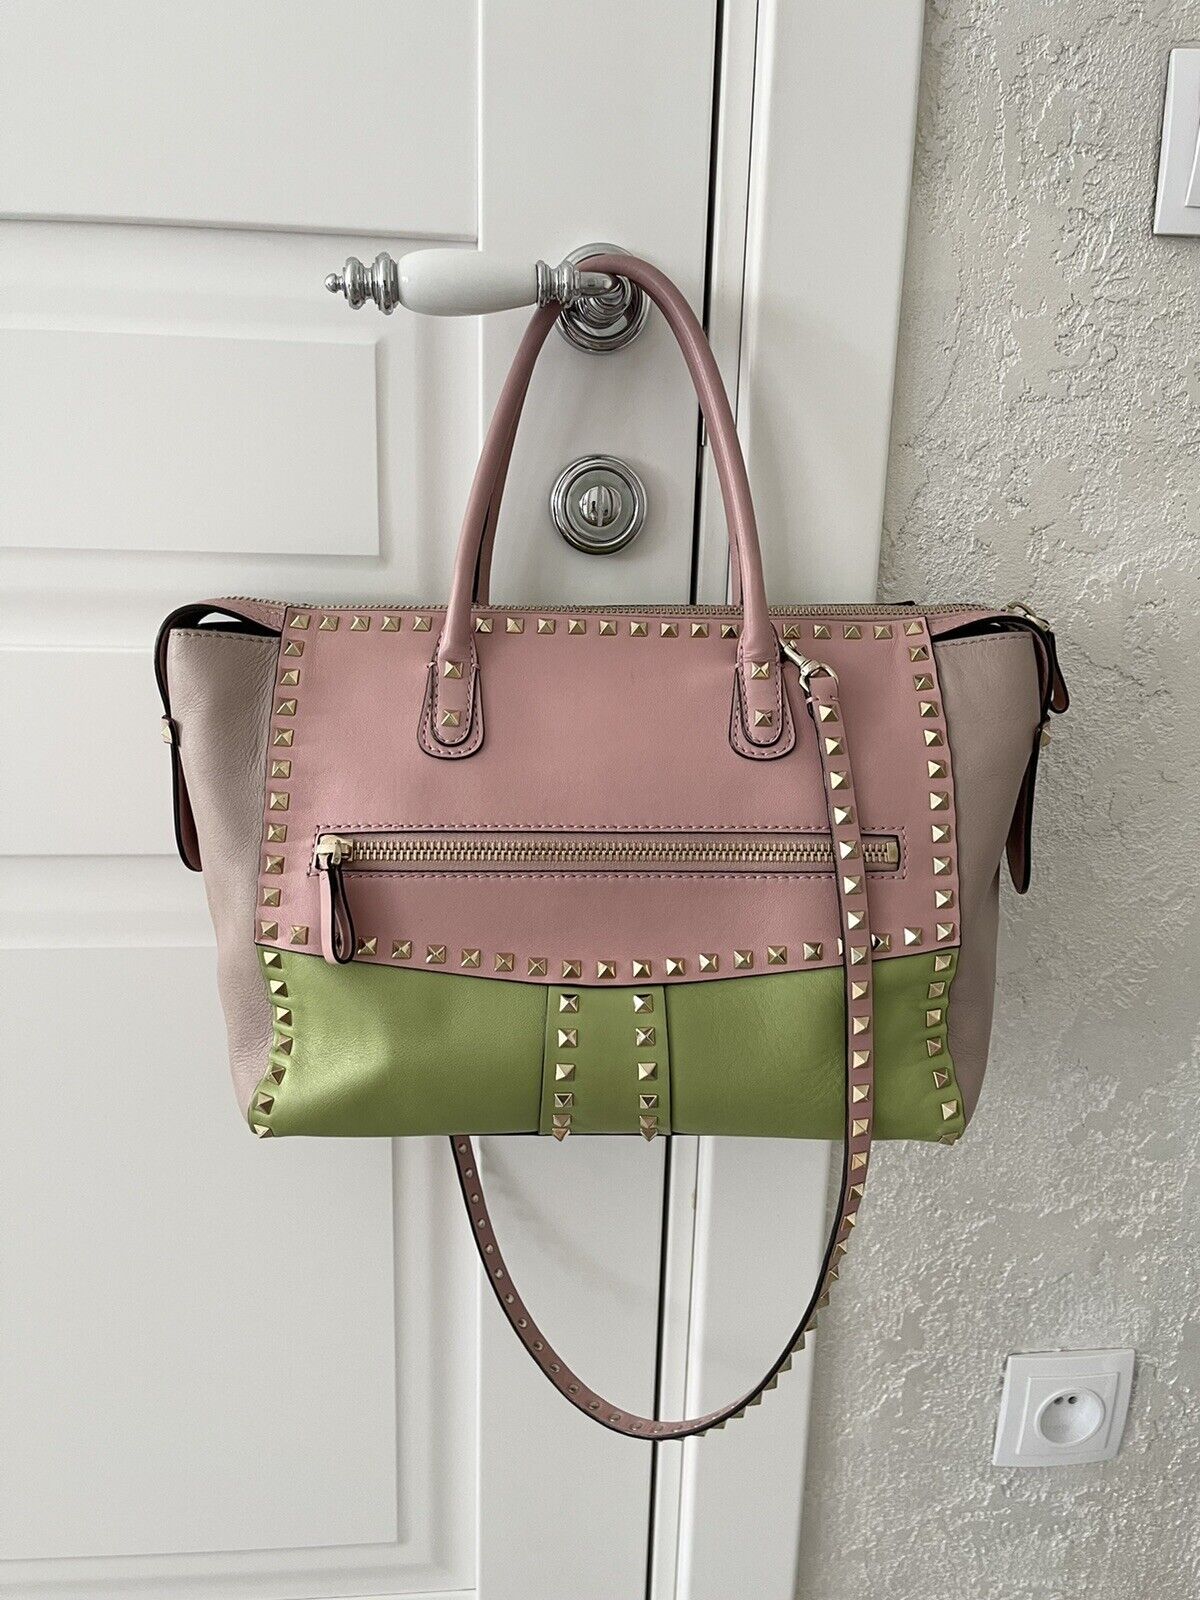 Valentino Garavani Rockstud Multicolor Large Leather Tote Bag Handbag AUTHENTIC